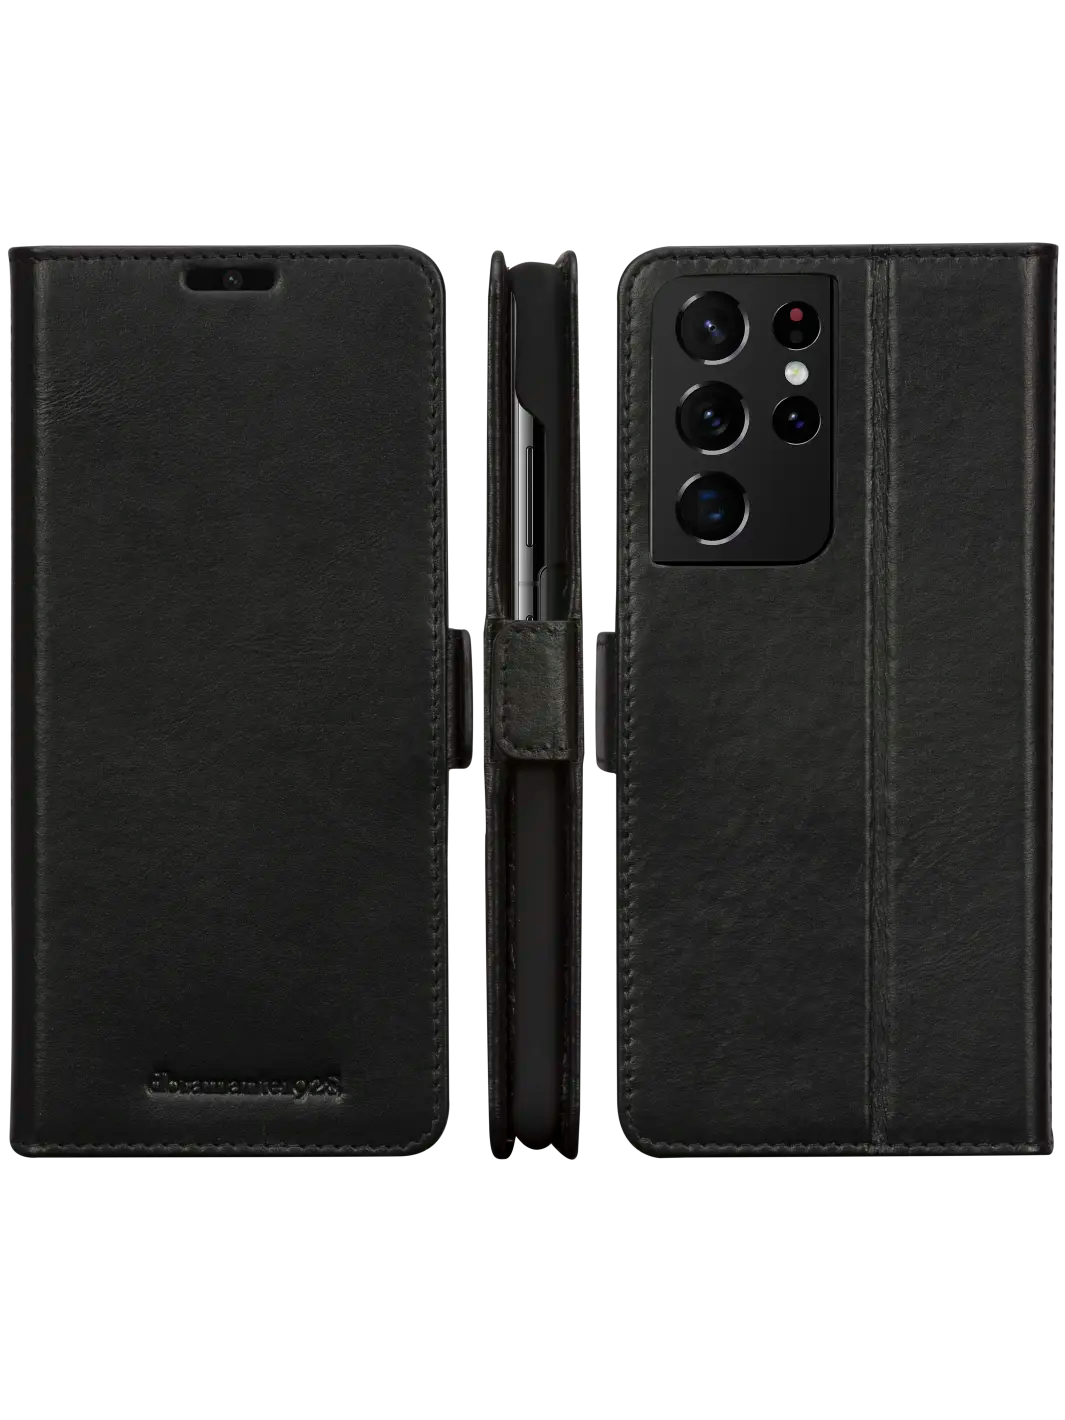 Copenhagen Slim Black Galaxy S21 Ultra Phone Cases